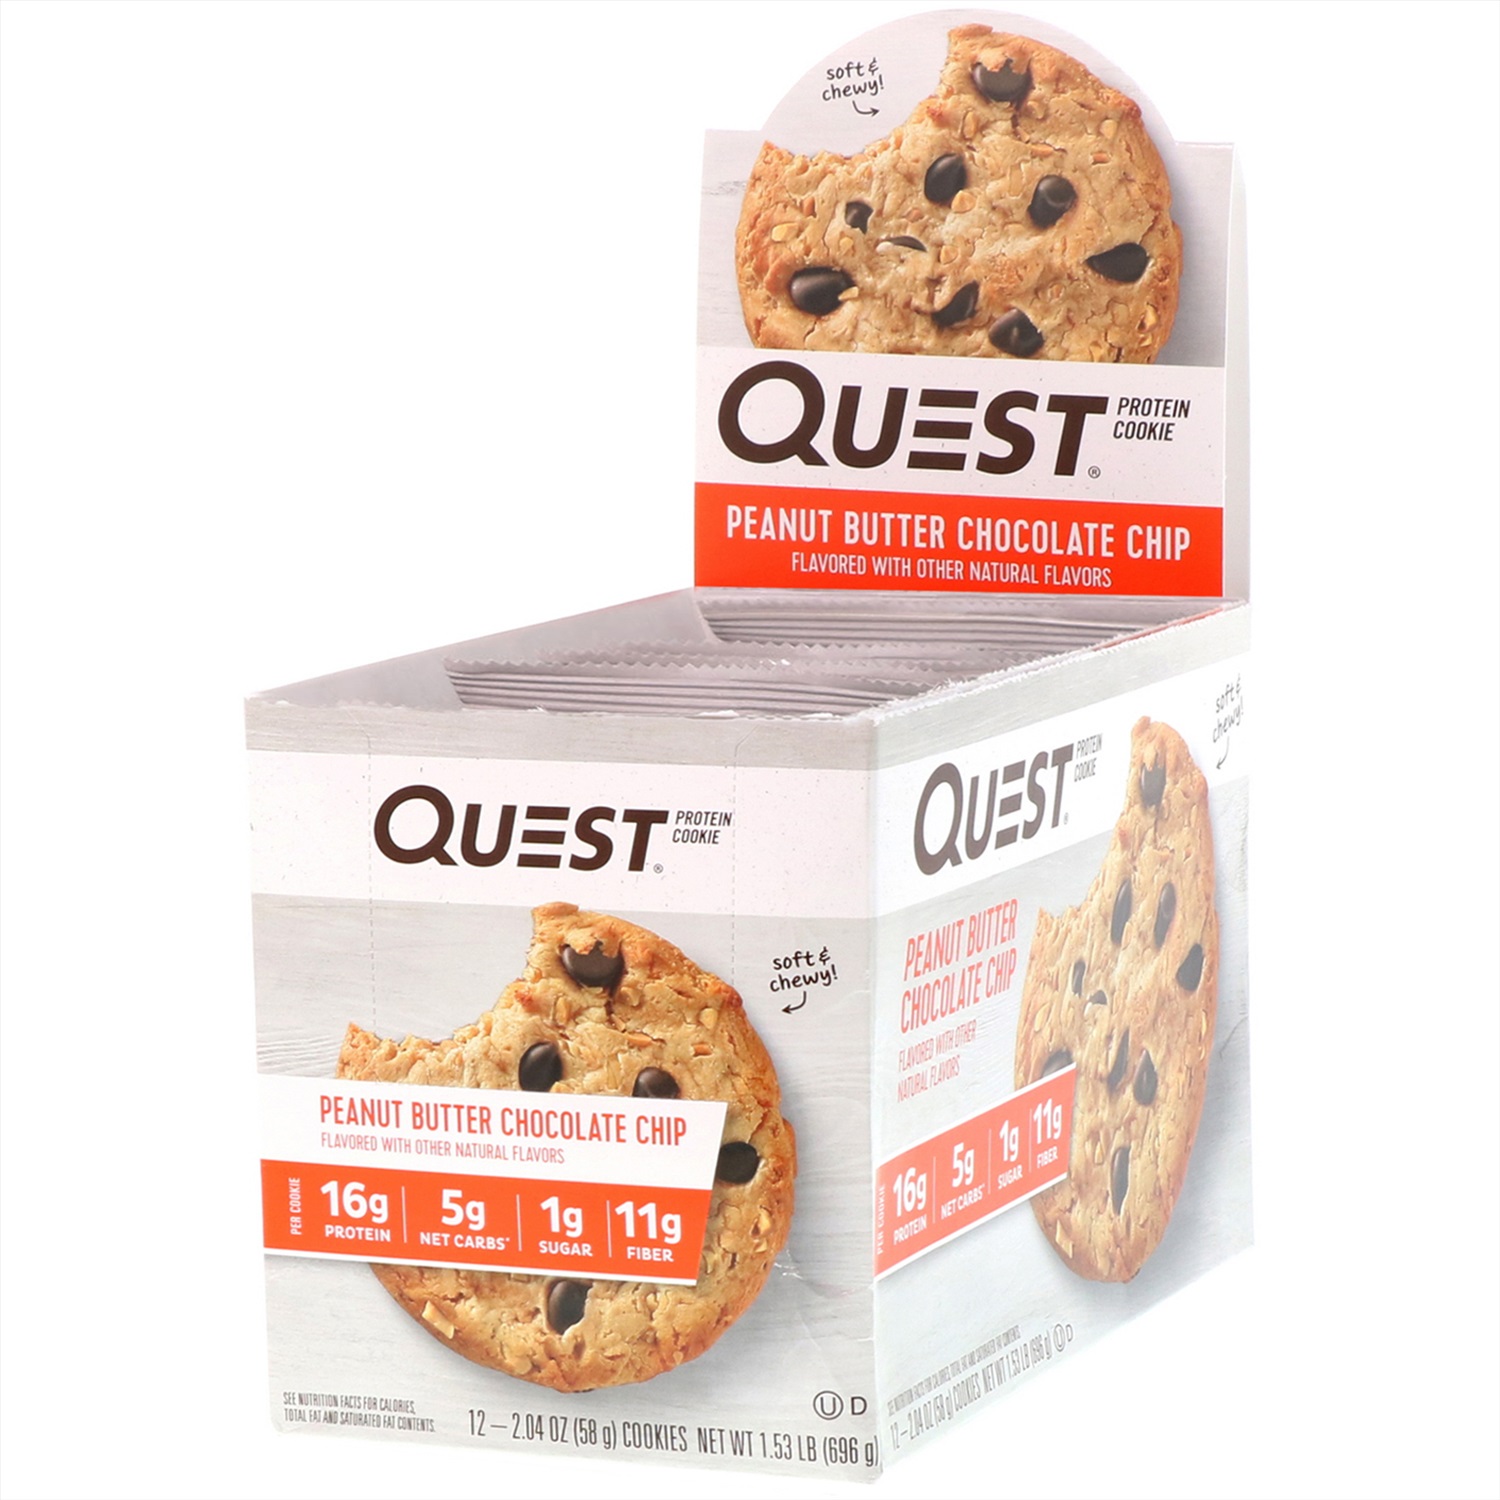 Quest cookie. Quest Nutrition печенье Protein cookie. Печенье протеиновое Нутритион 21%. Протеиновое печенье с арахисом. Протеиновые печенье в упаковке две штуки.